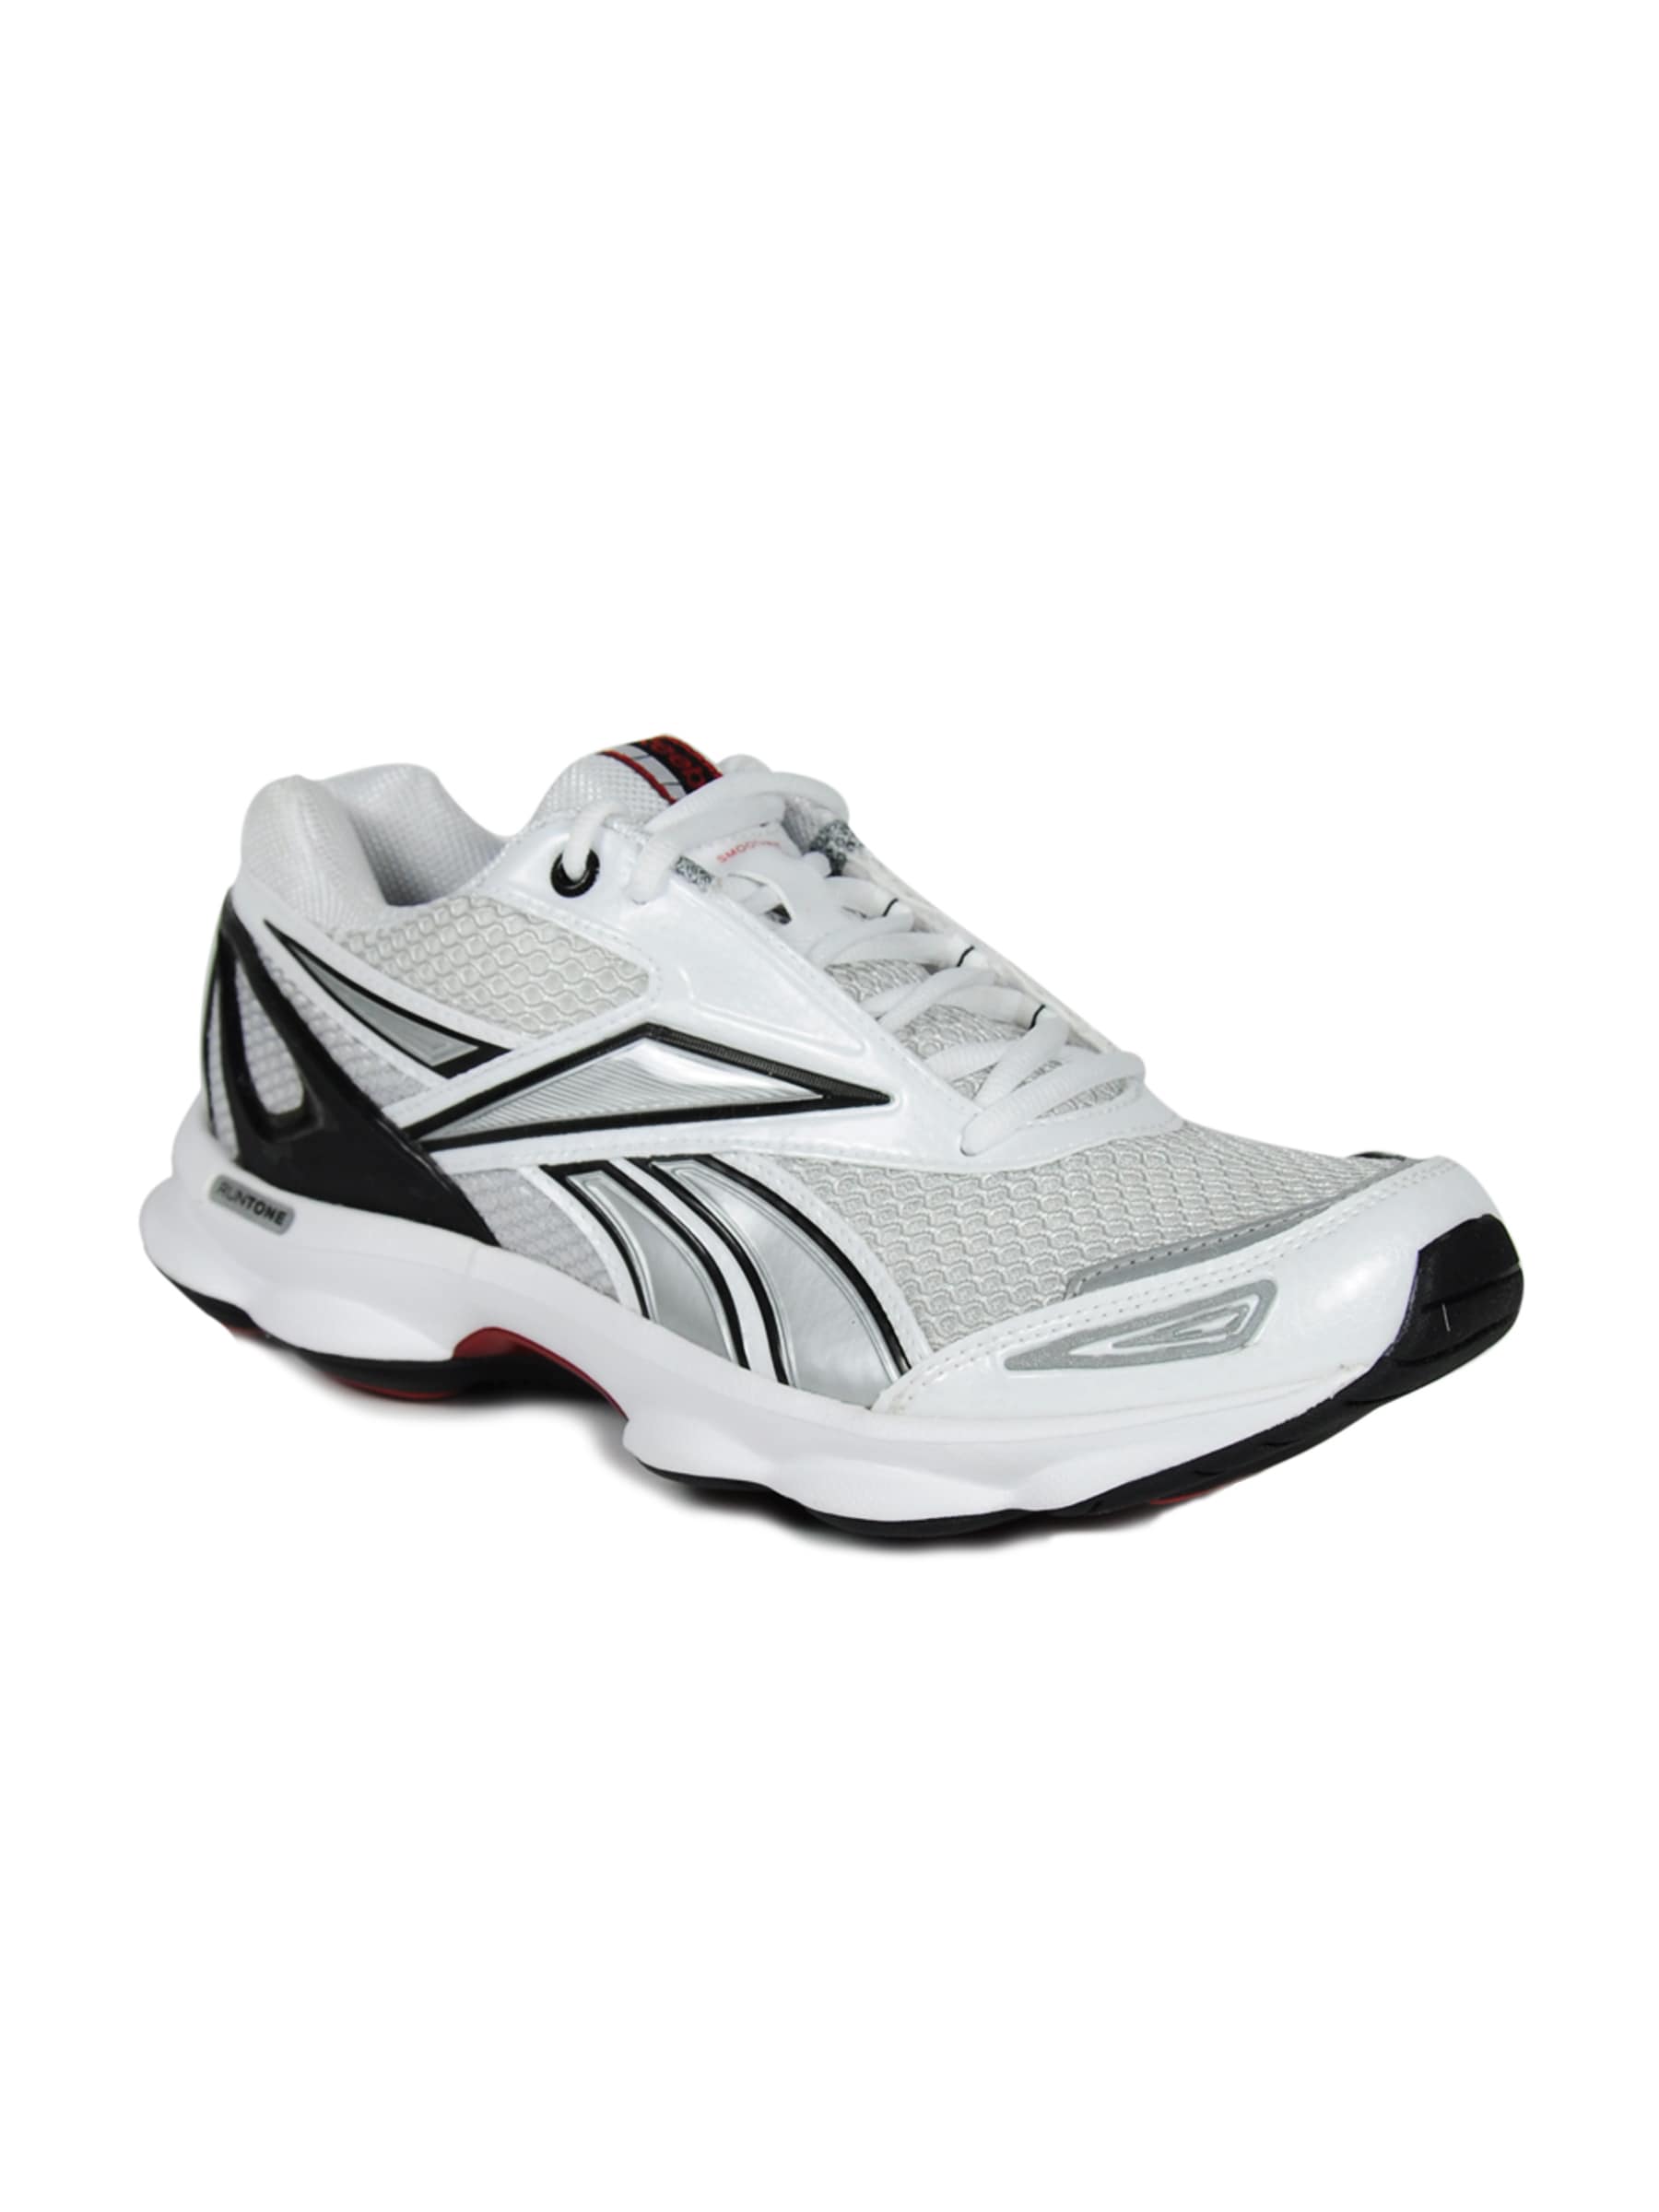 Reebok Men Runtone Action White Sports Shoes